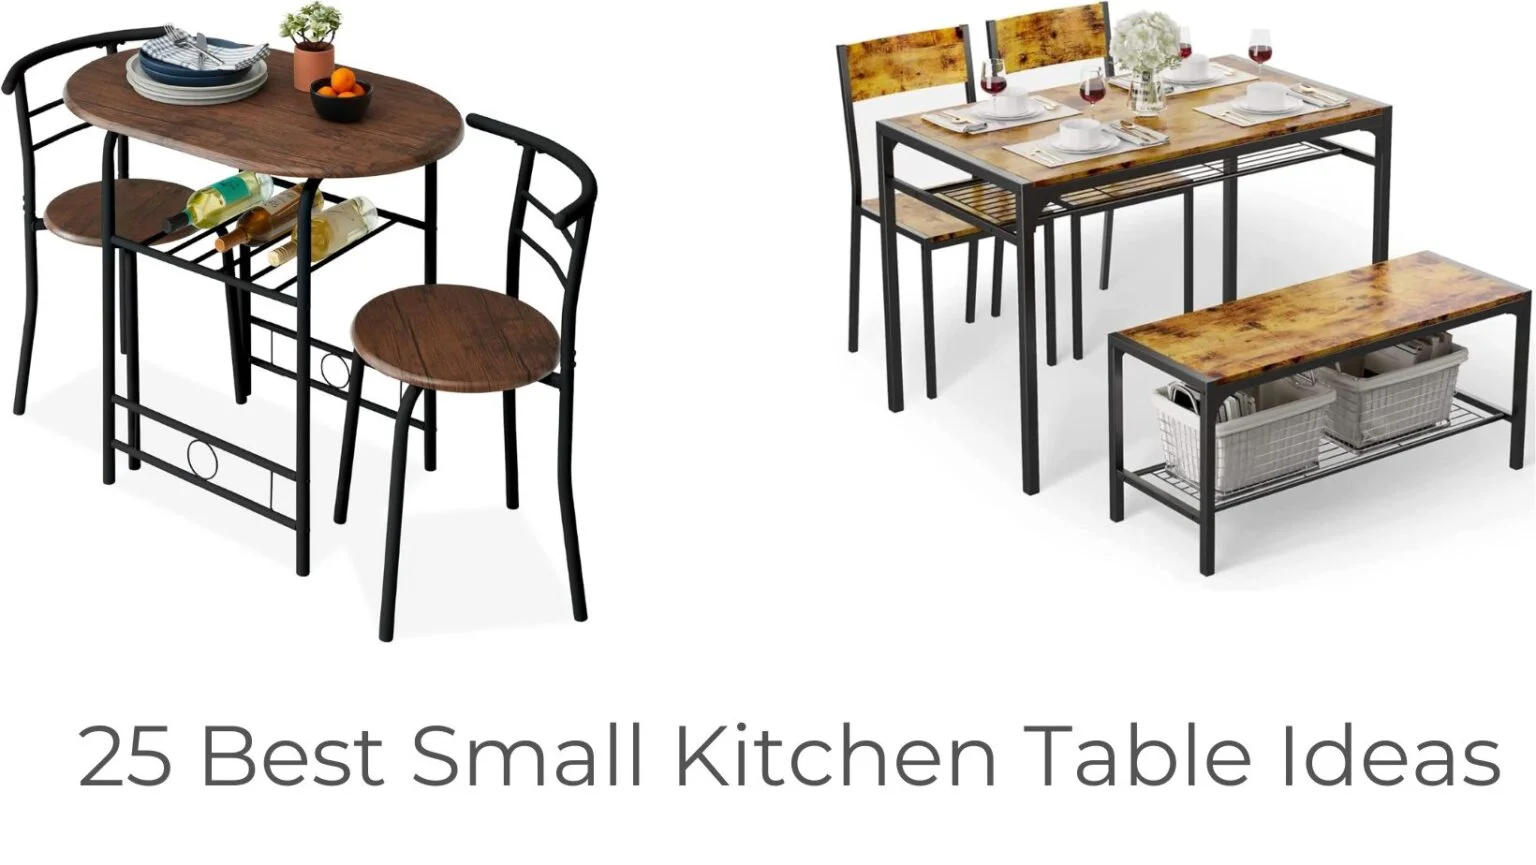 25 Best Small Kitchen Table Ideas